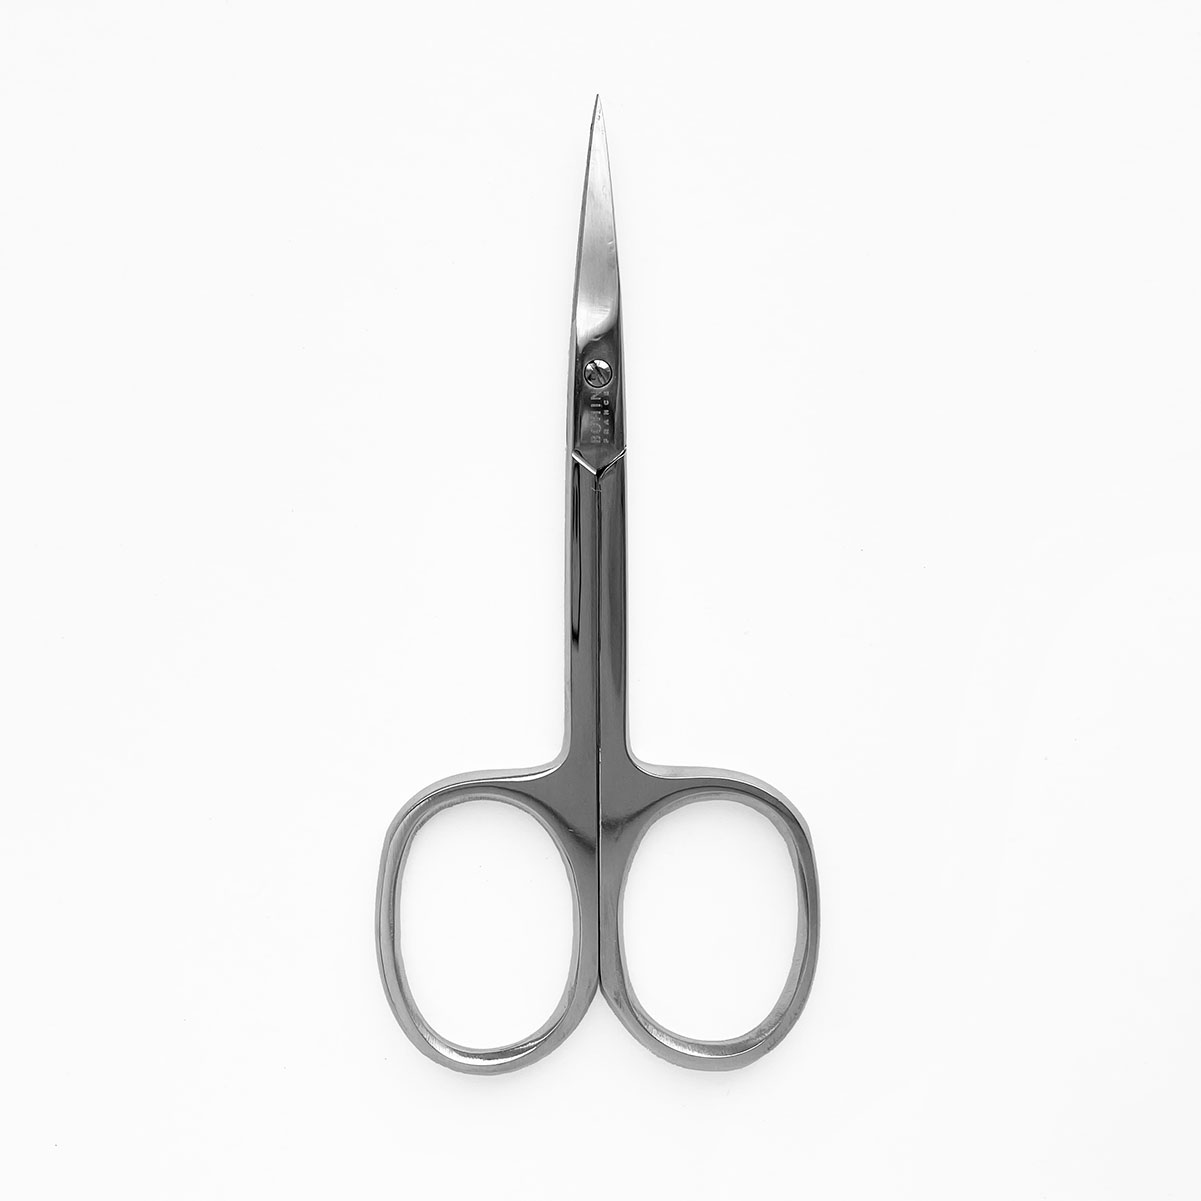 https://maydel.com/wp-content/uploads/bohin-left-handed-embroidery-scissors.jpg